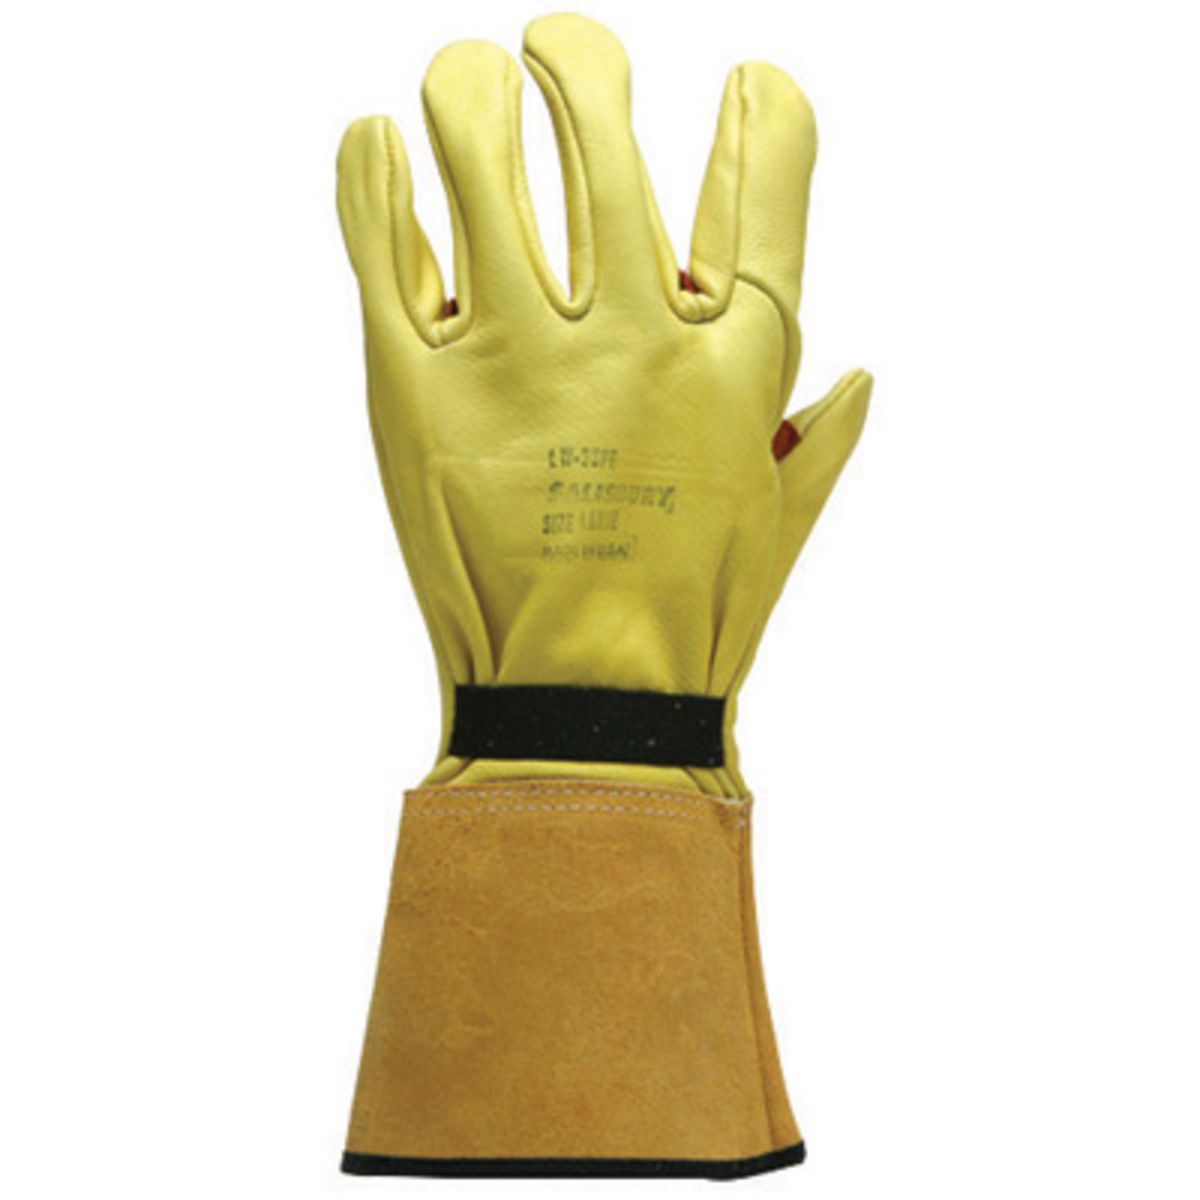 Salisbury by Honeywell Medium High Quality Grain Cowhide Linesmen's Work Gloves With Pigskin Cuff